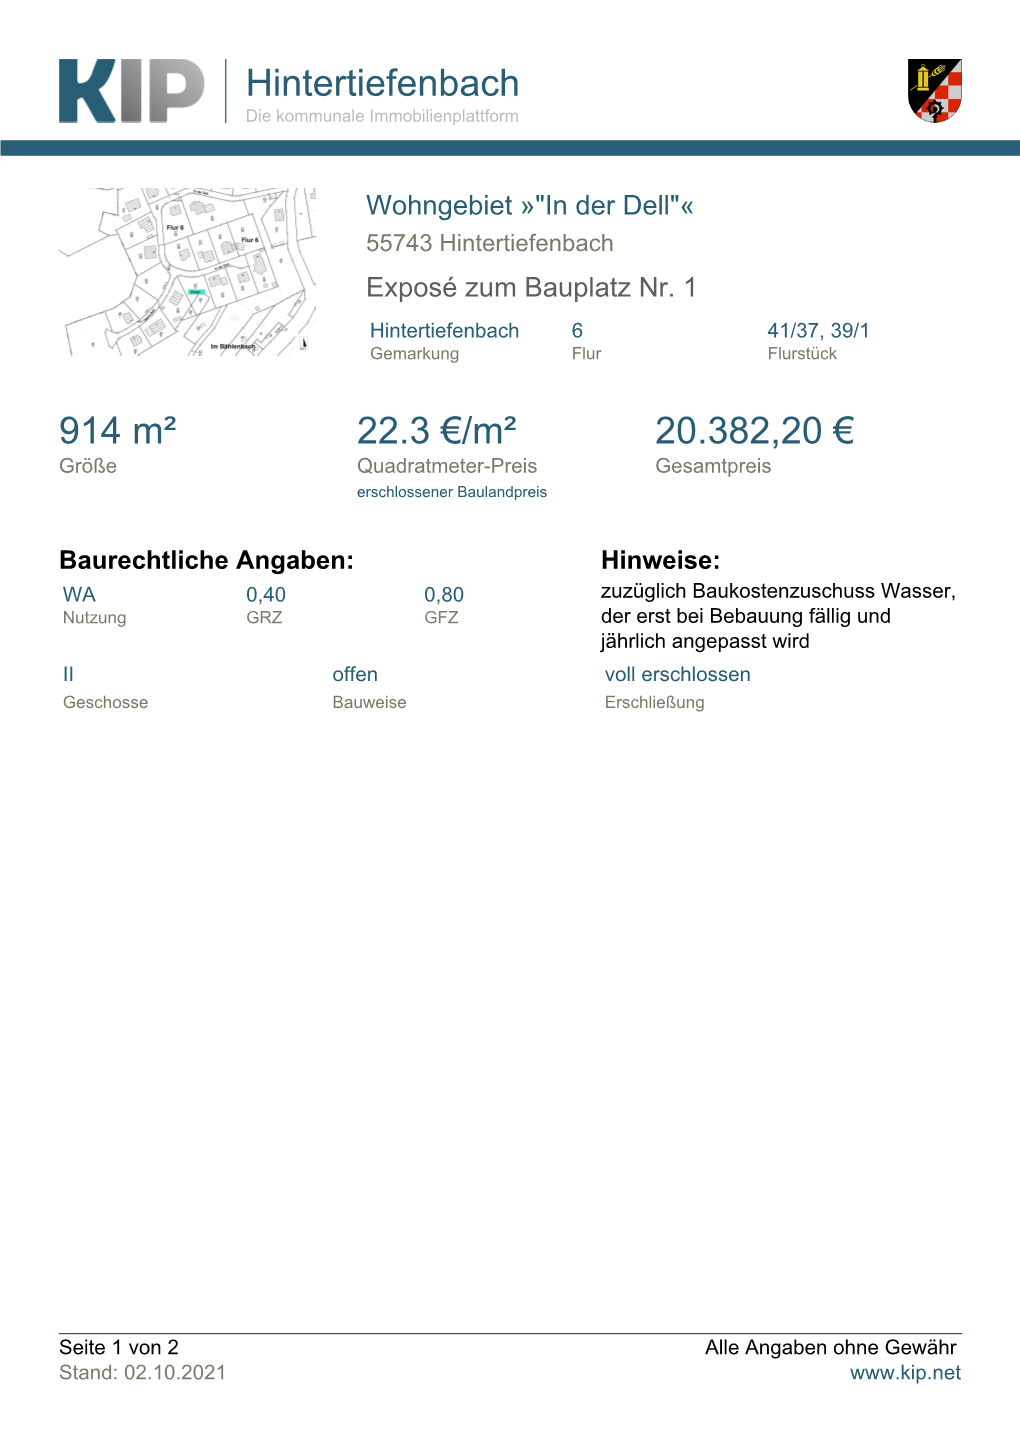 Hintertiefenbach 914 M² 22.3 €/M² 20.382,20 €